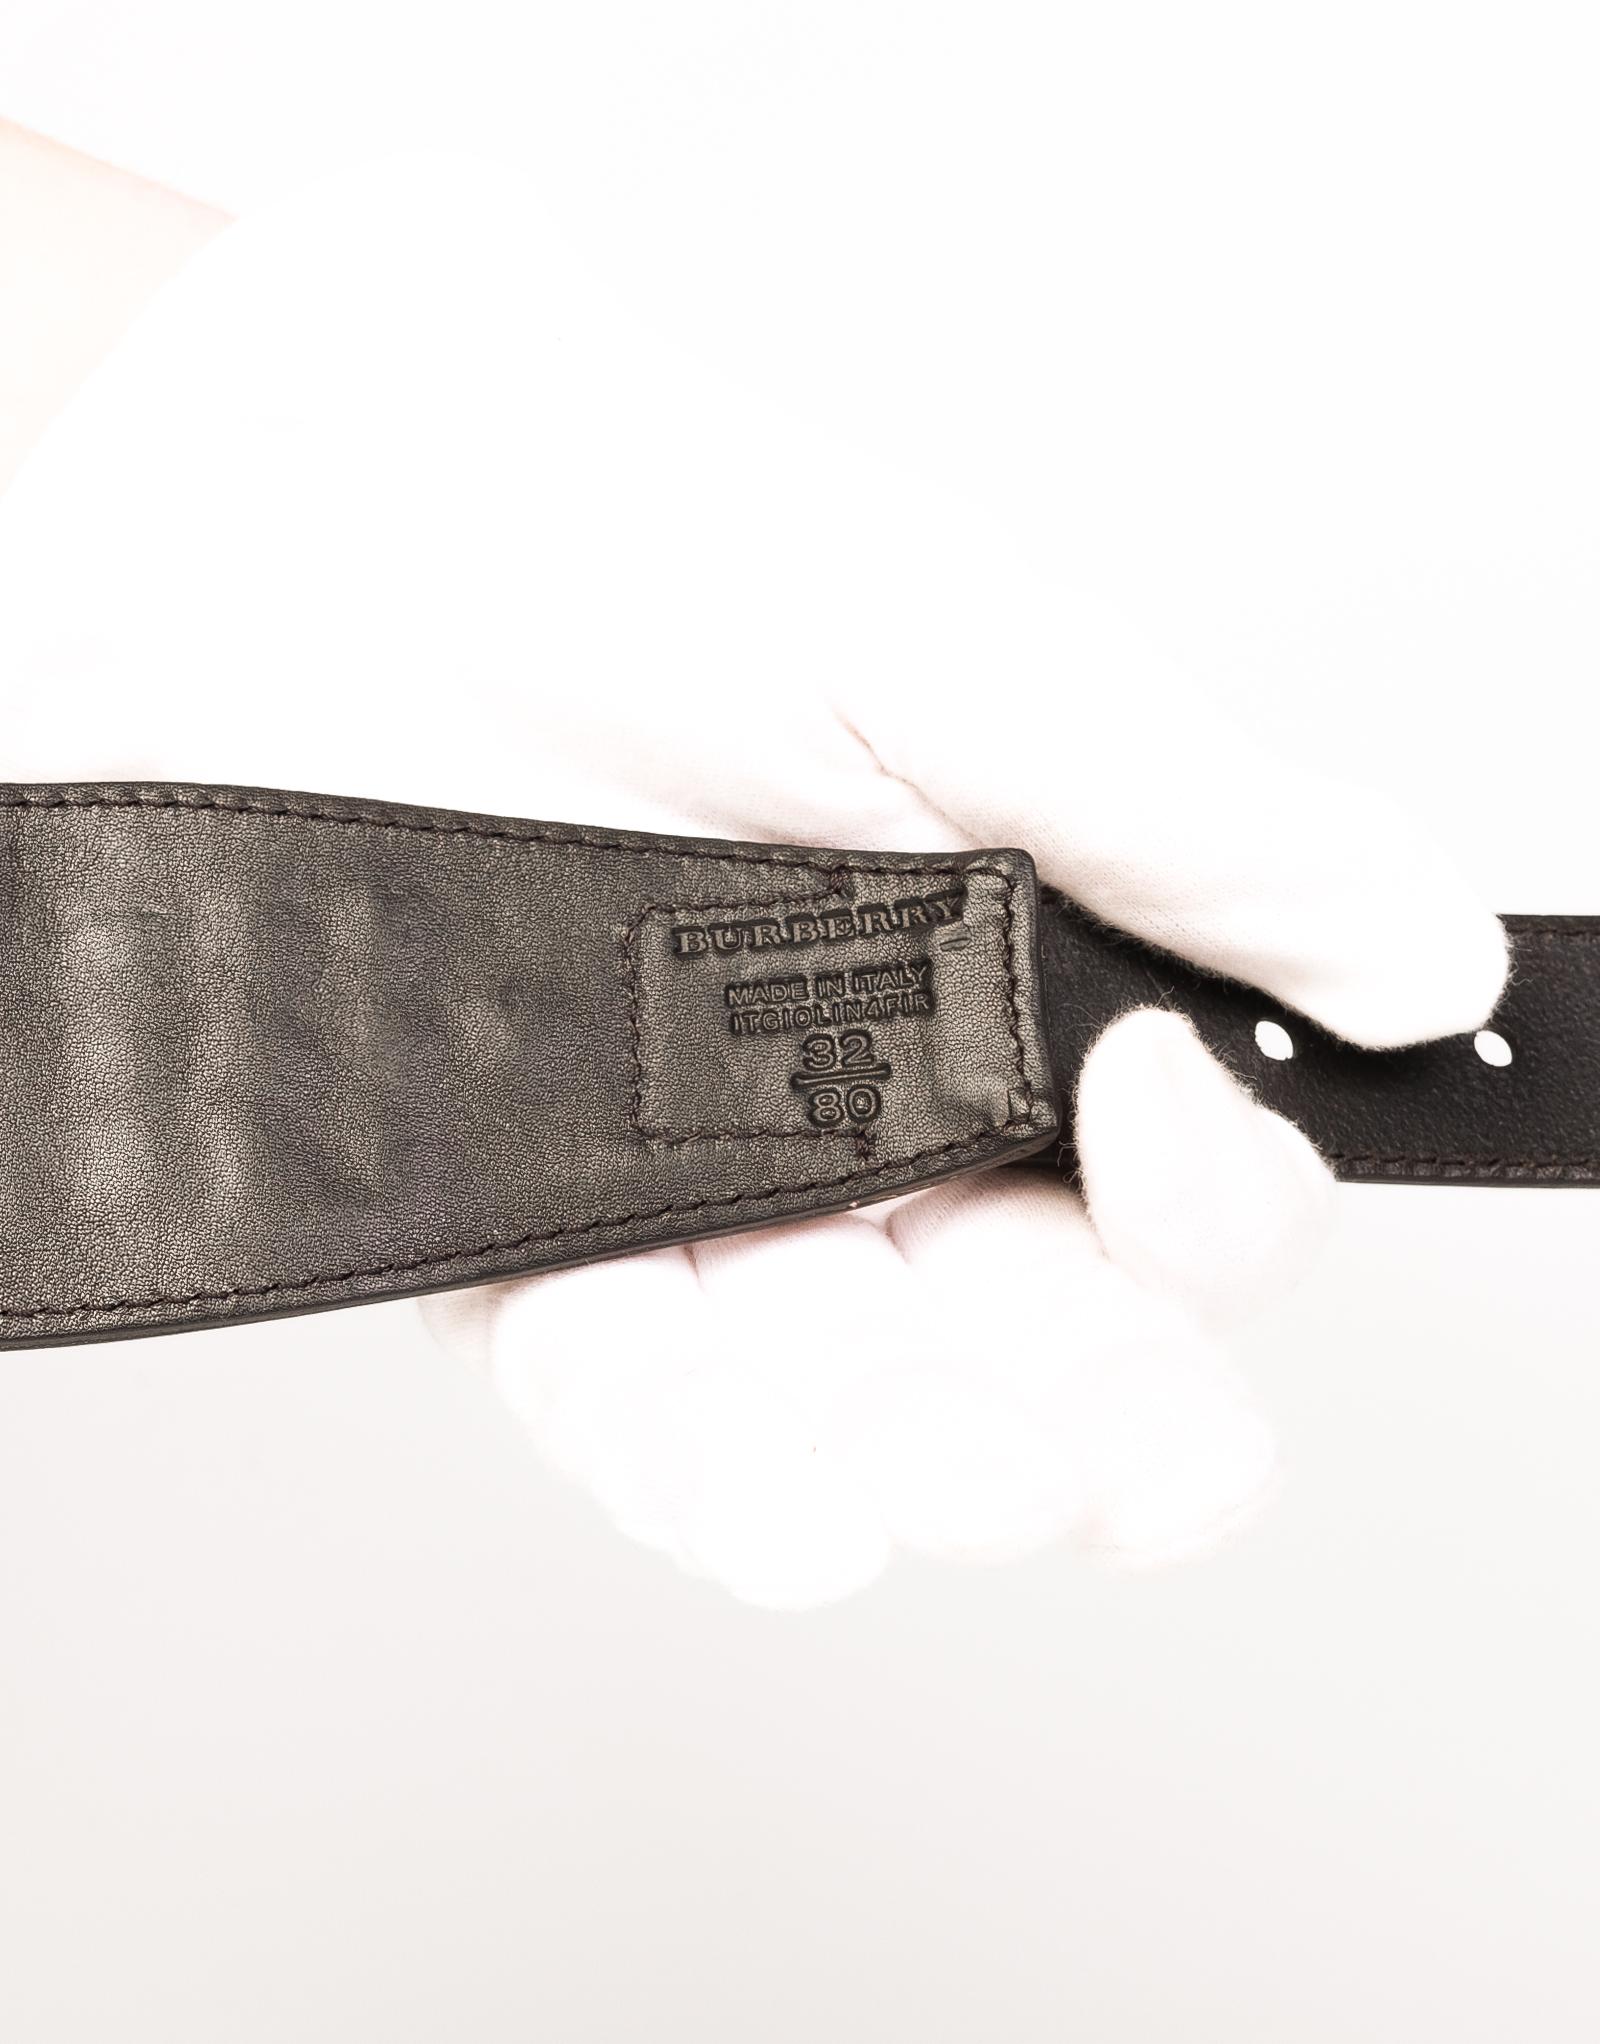 burberry studded belt